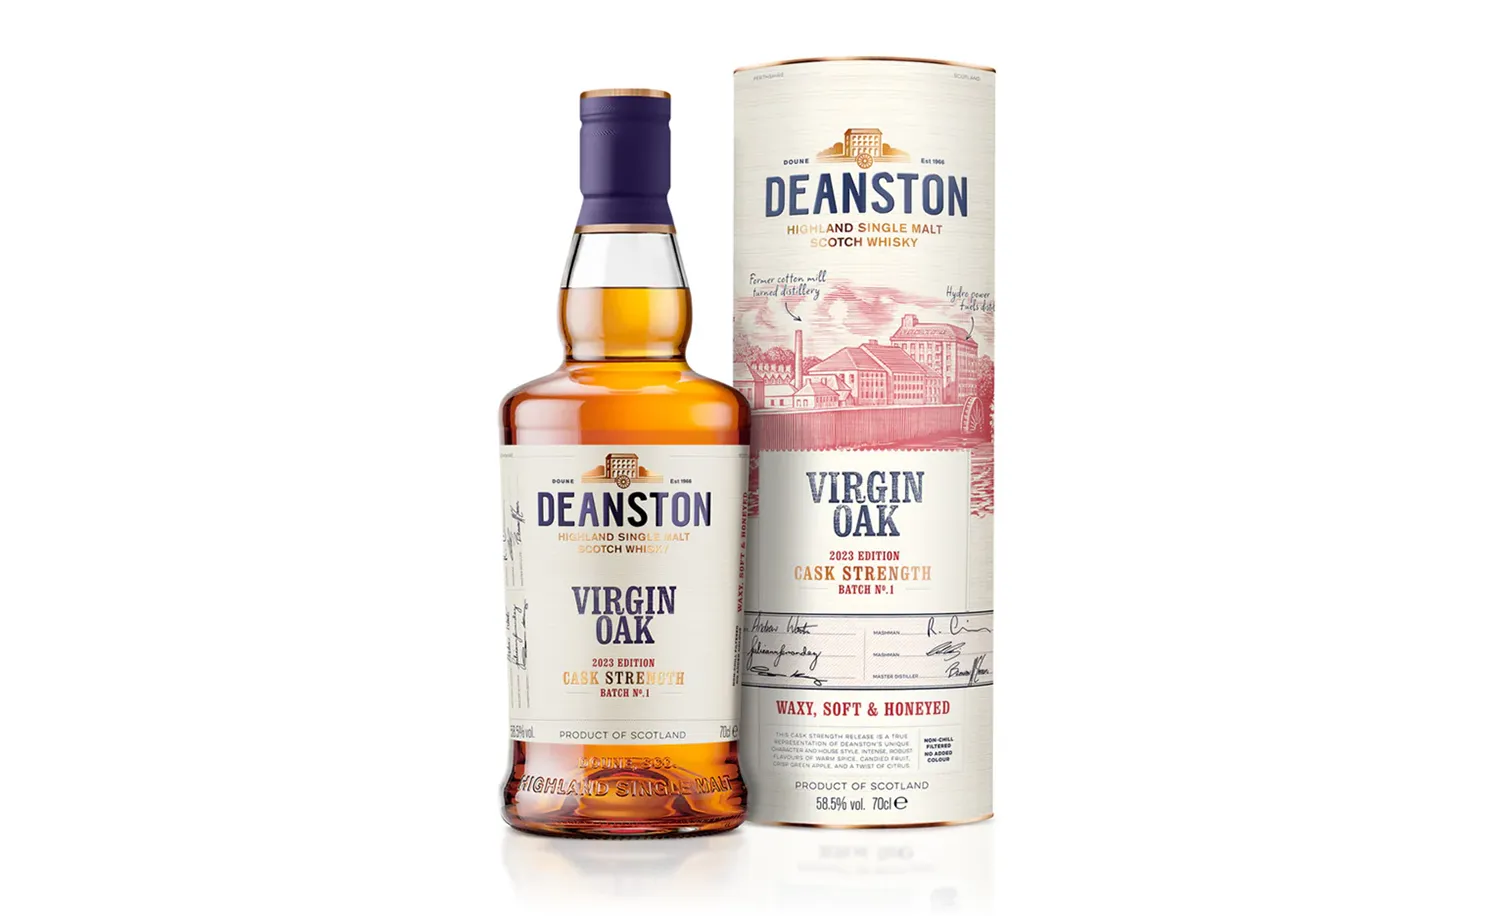 Deanston Virgin Oak Cask Strength’s first batch launched